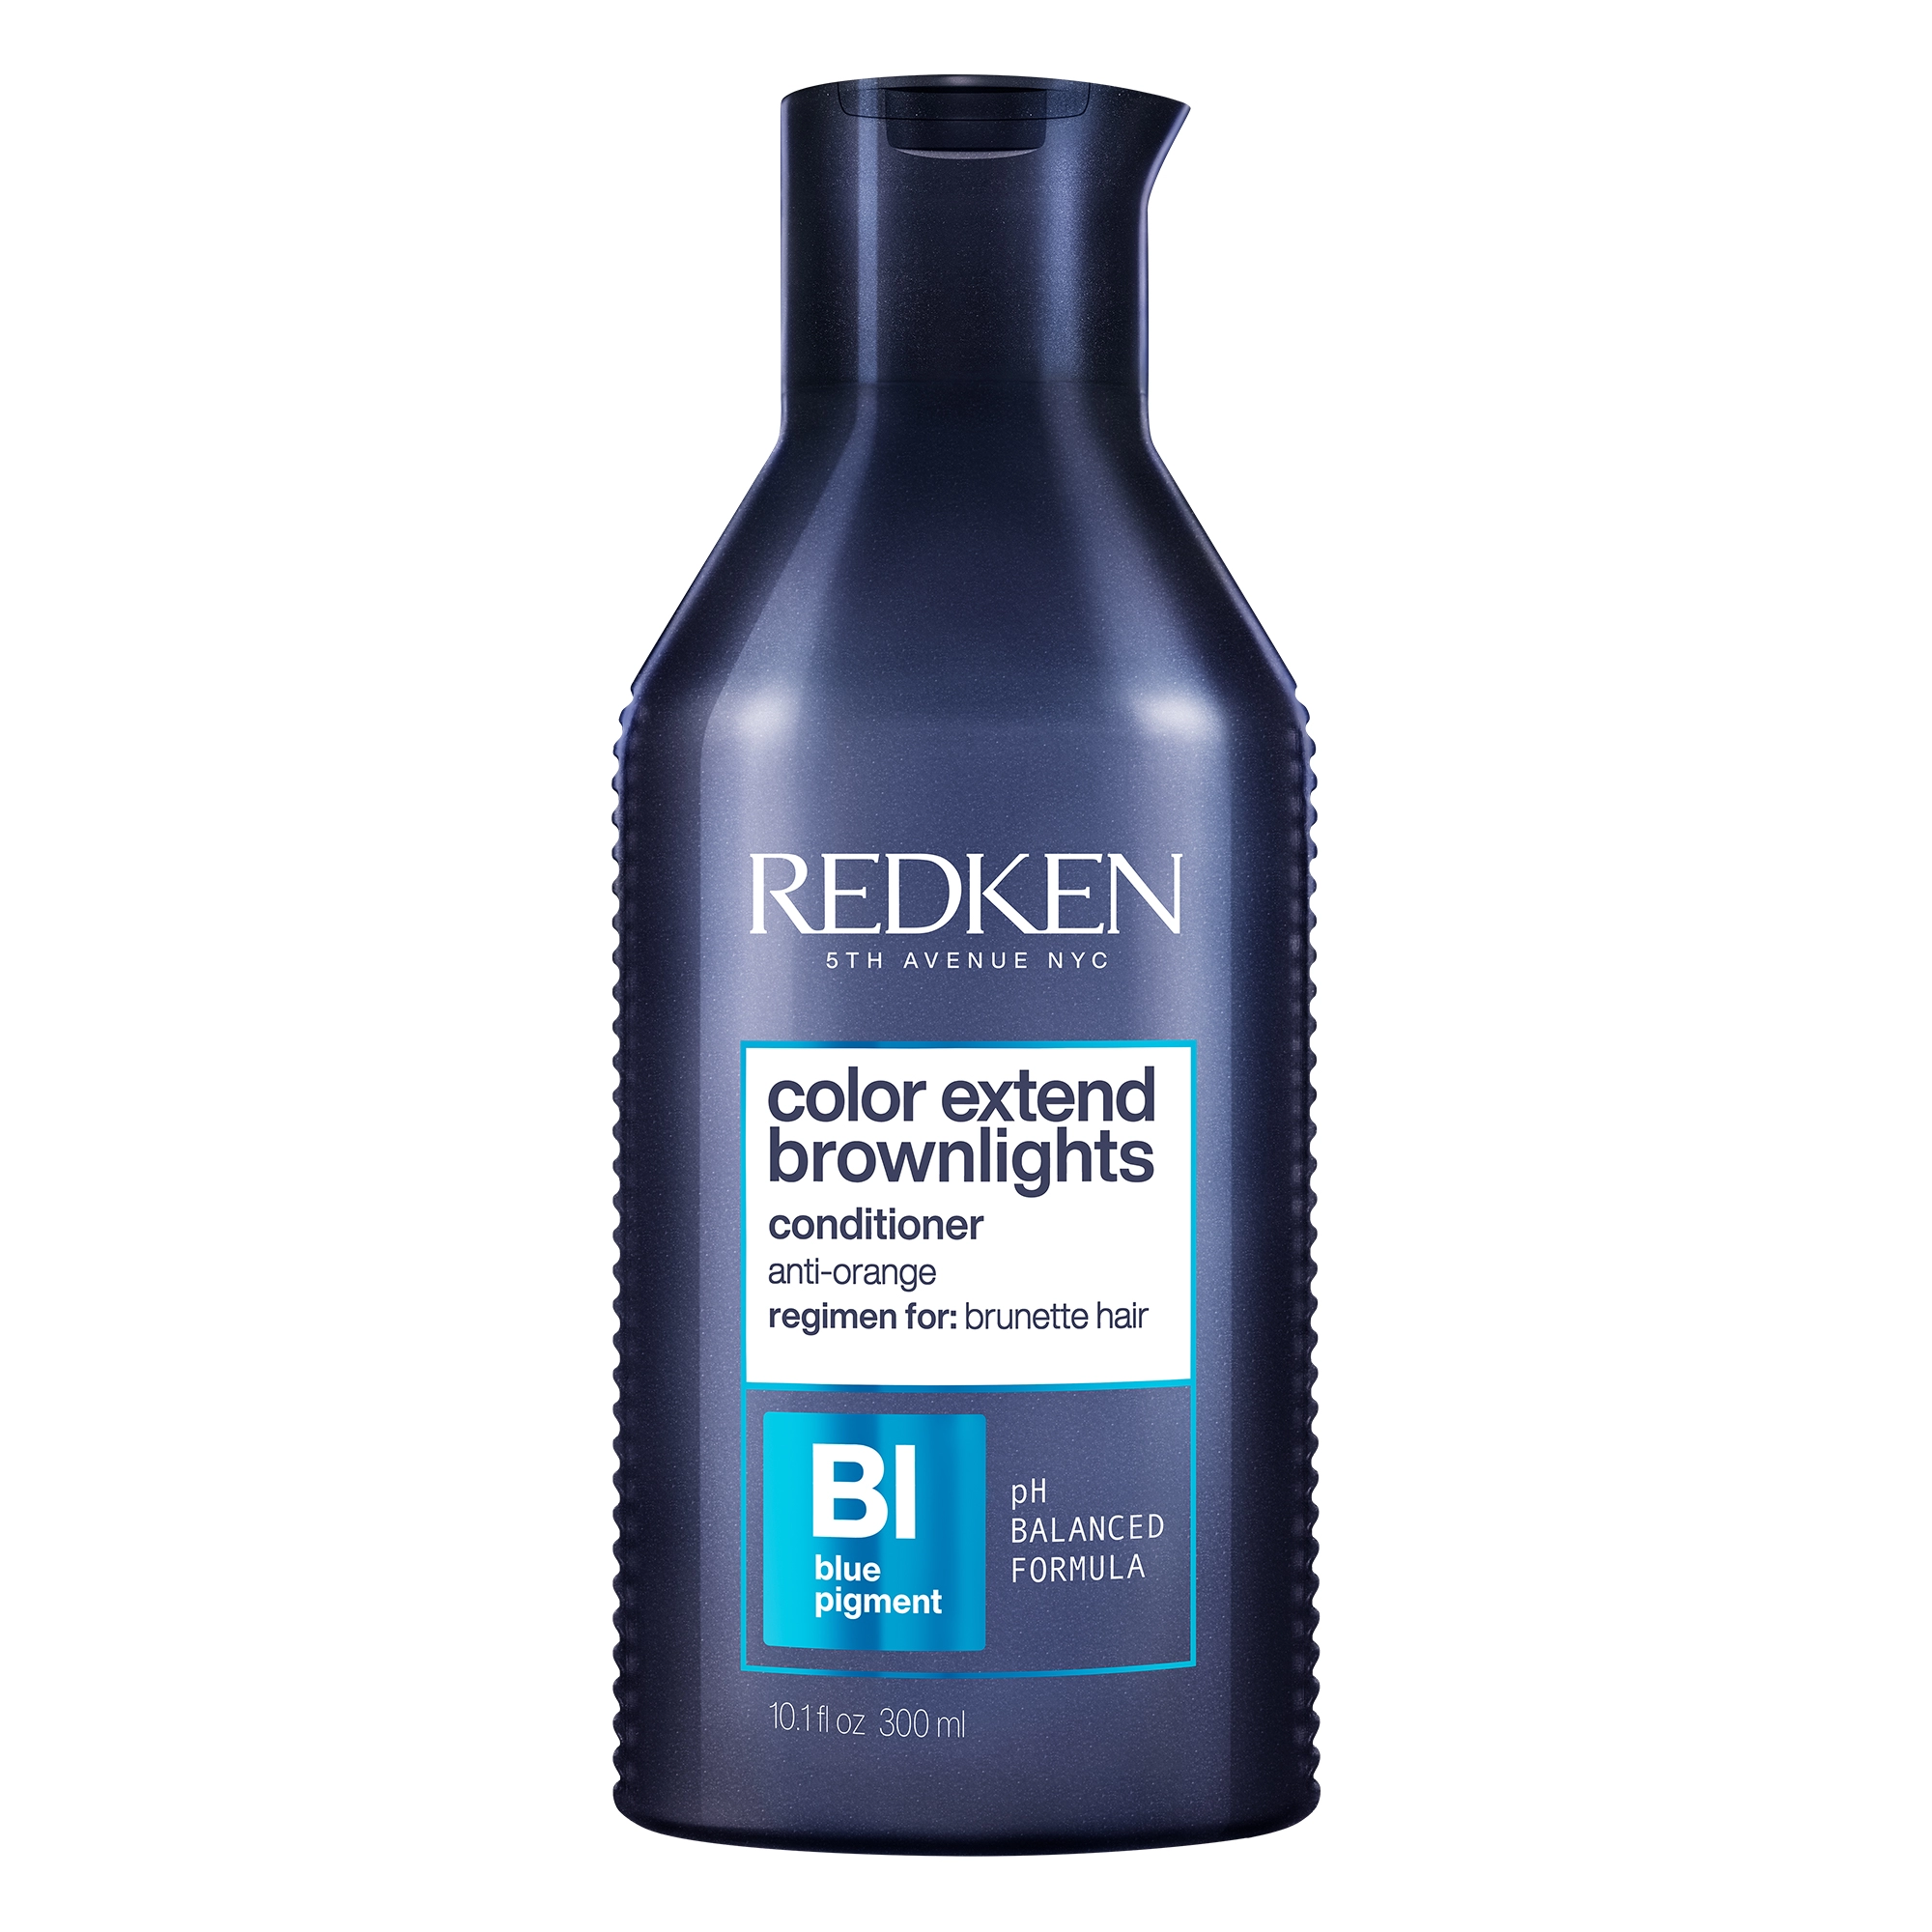 Redken 2020 Color Extend Brownlights Conditioner Product Shot 2000x2000 1 jpg